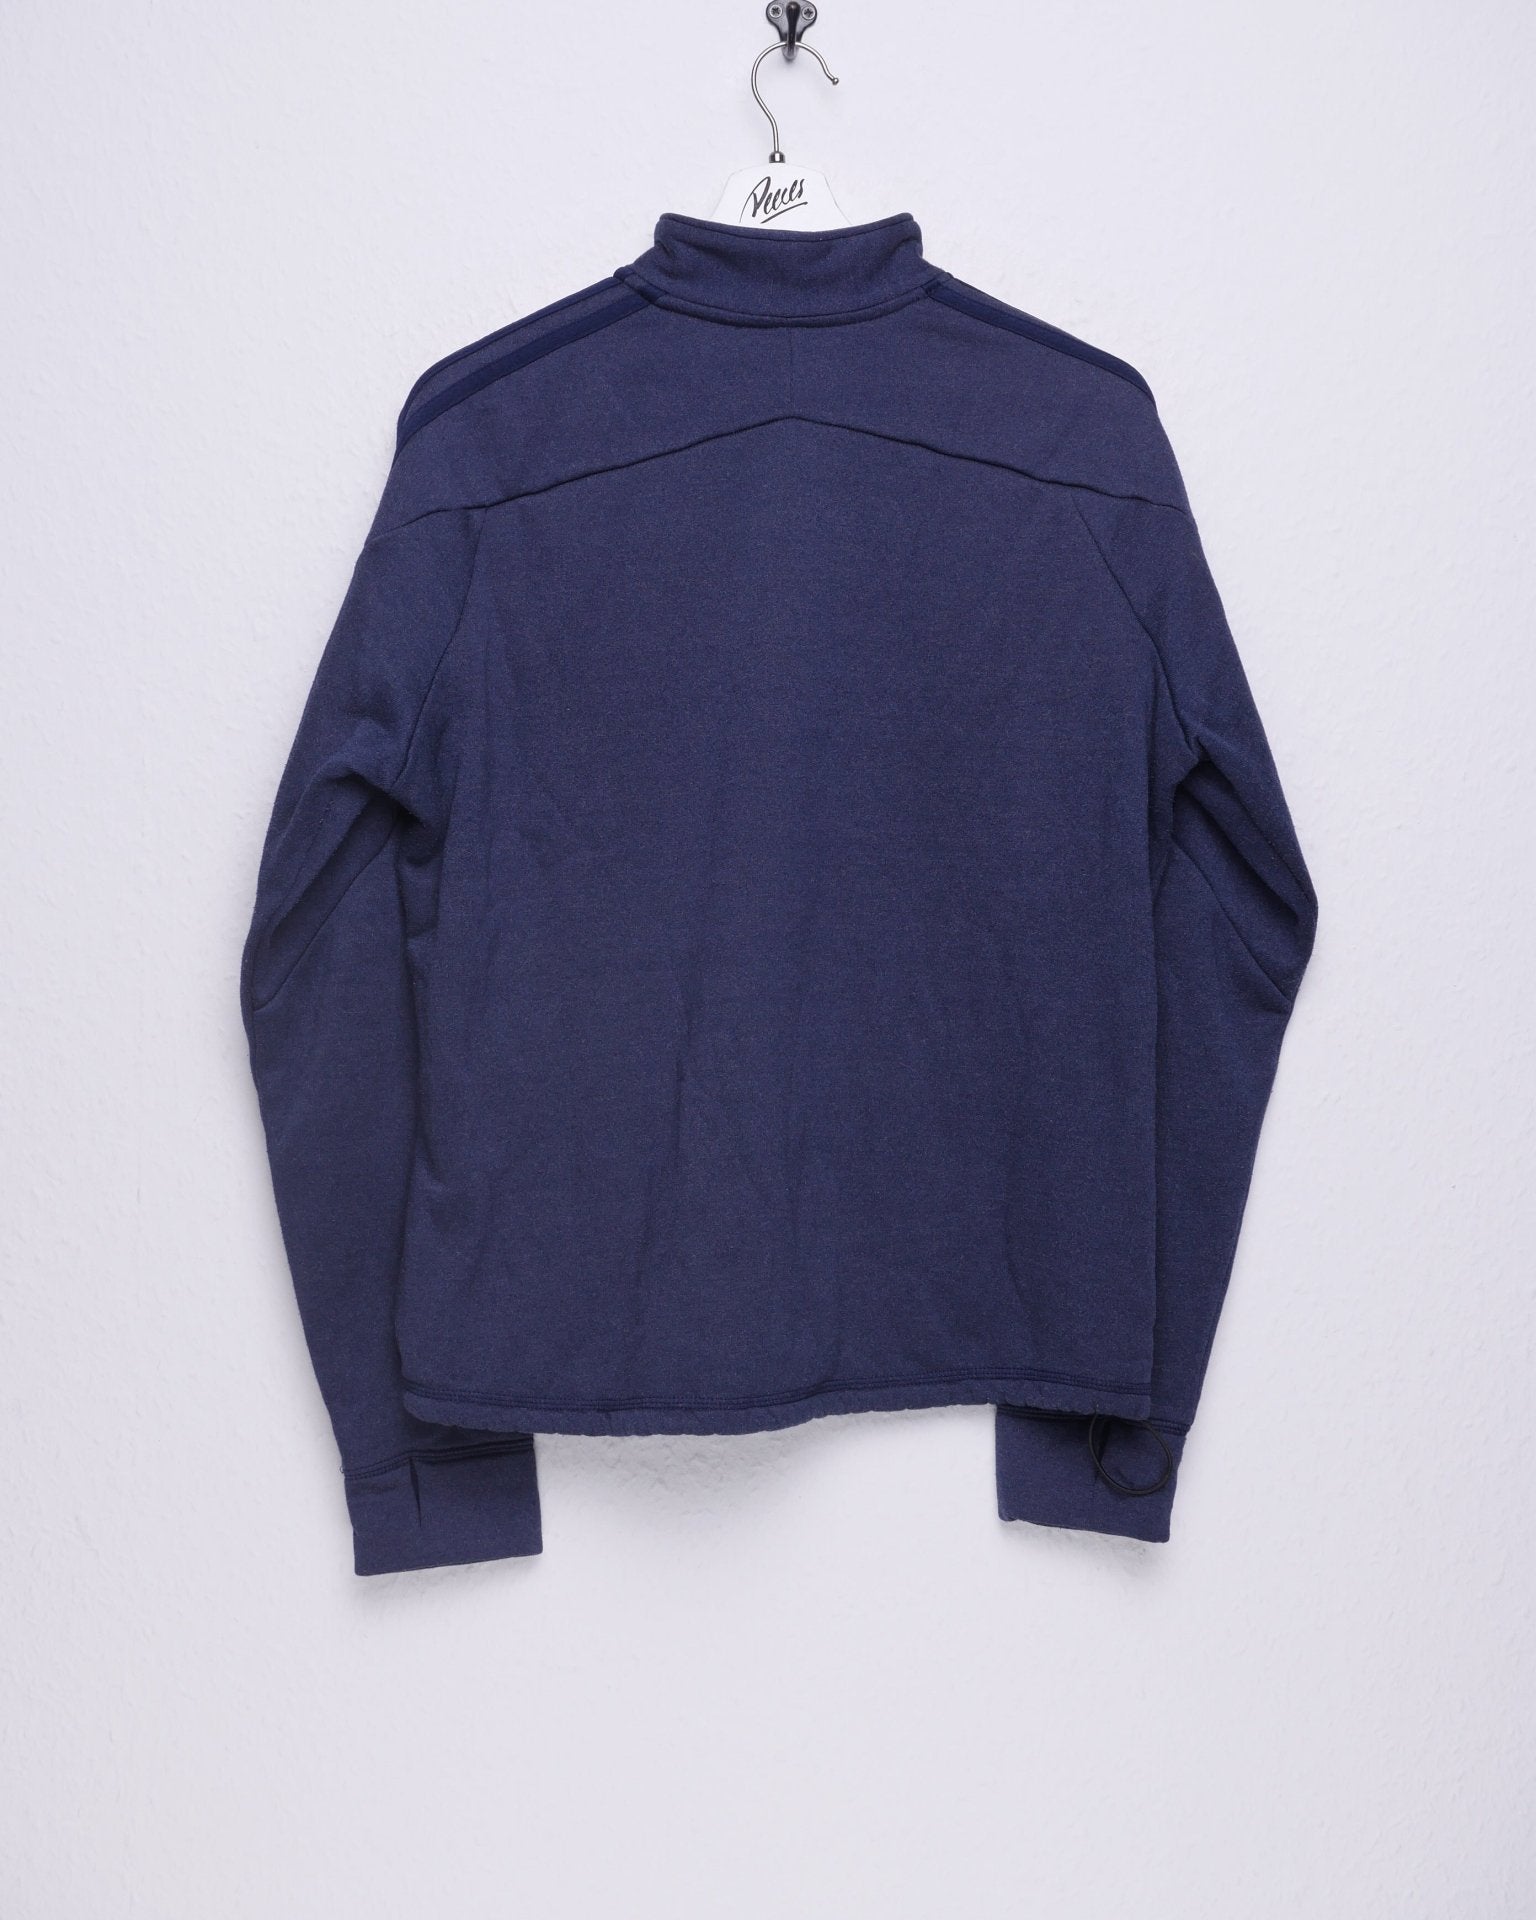 Adidas embroidered Logo navy College Half Zip Sweater - Peeces